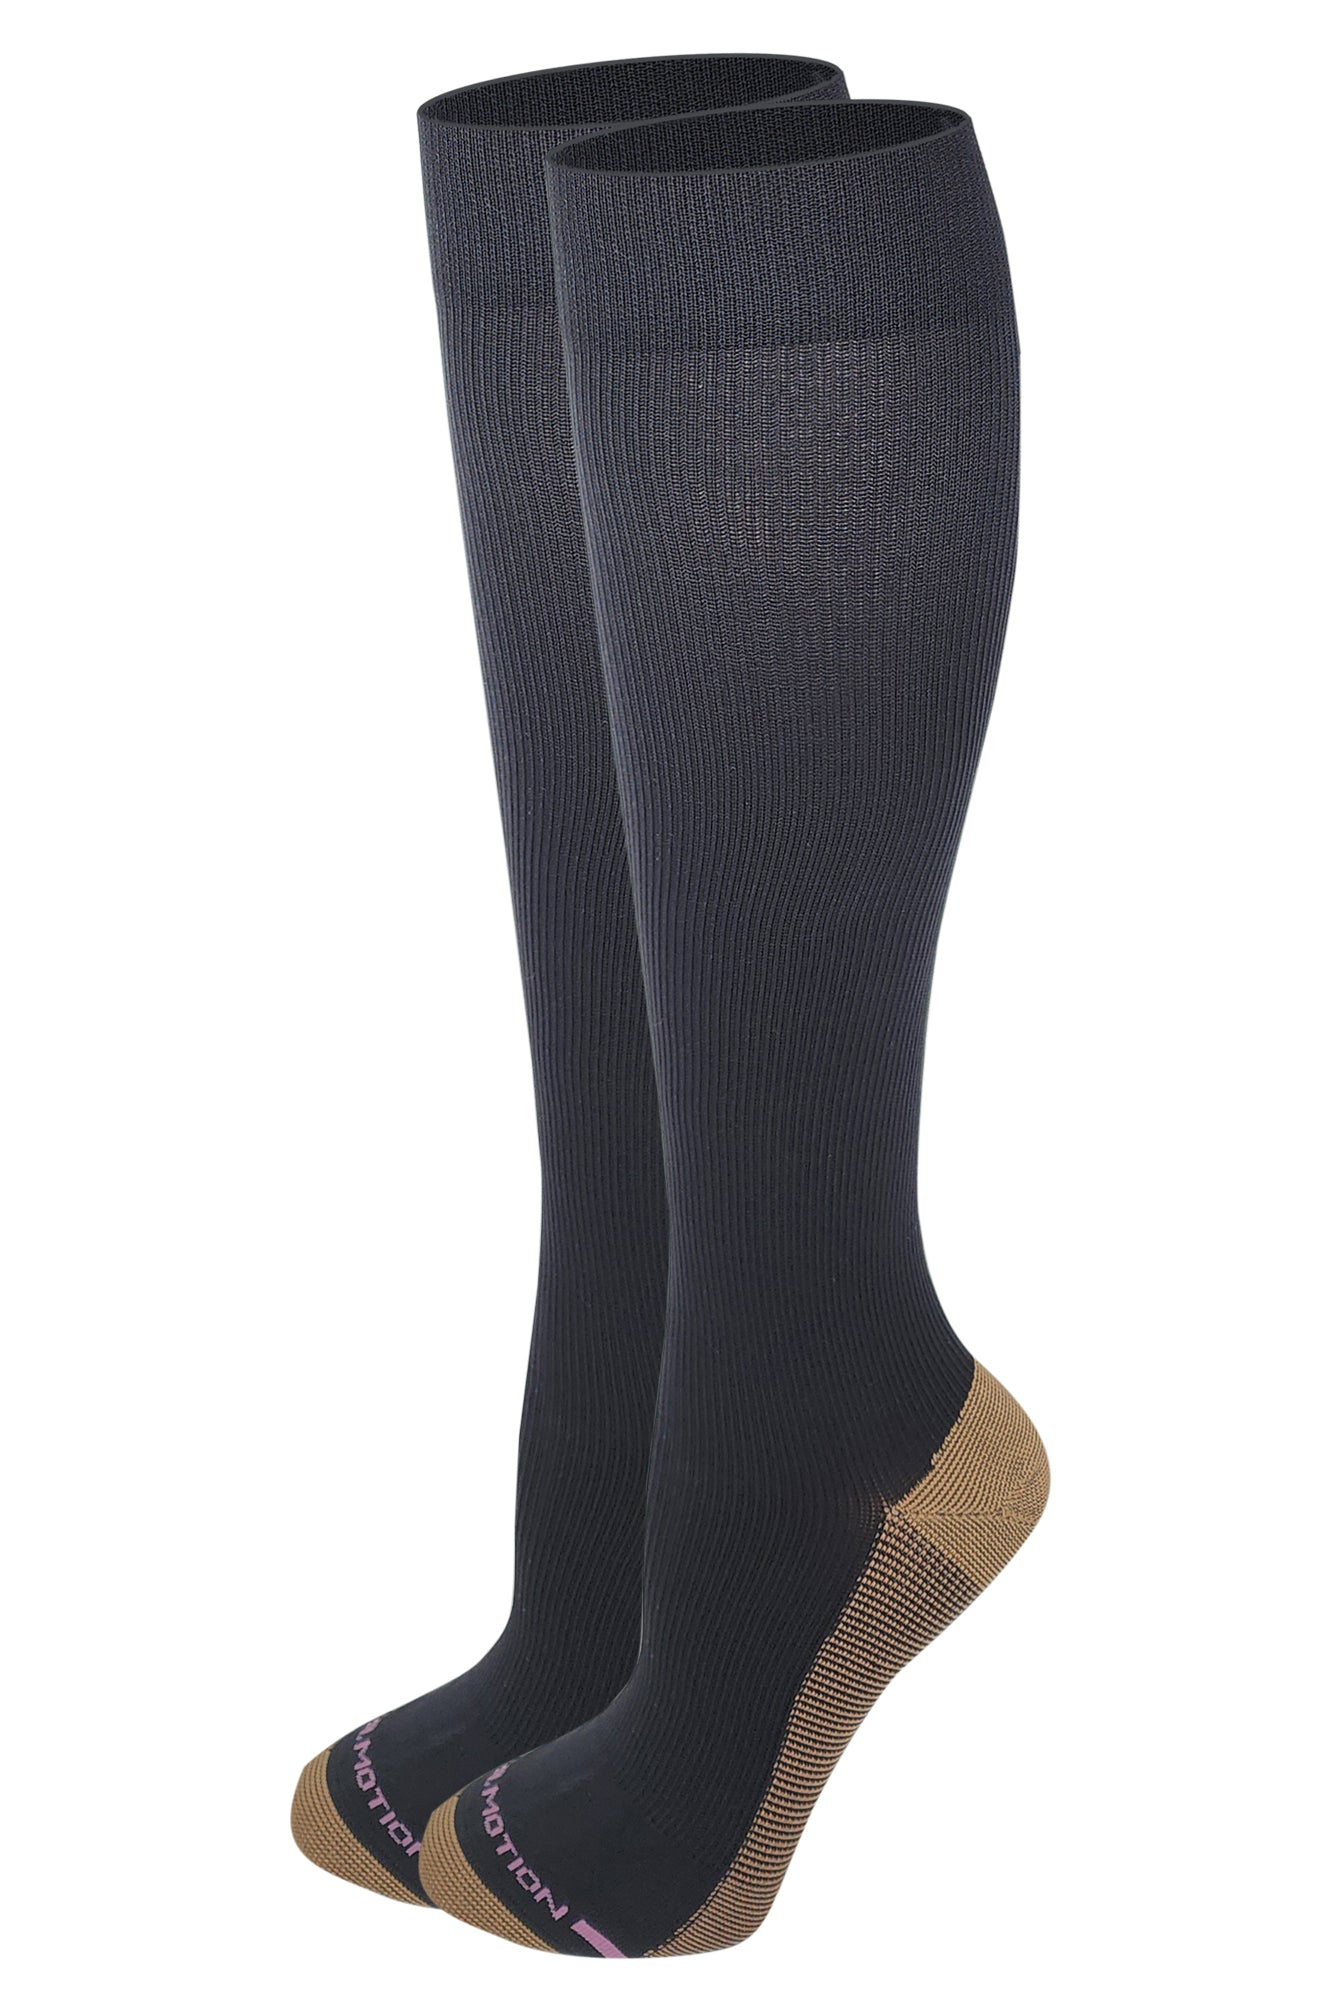 Knee High Compression Socks for Women